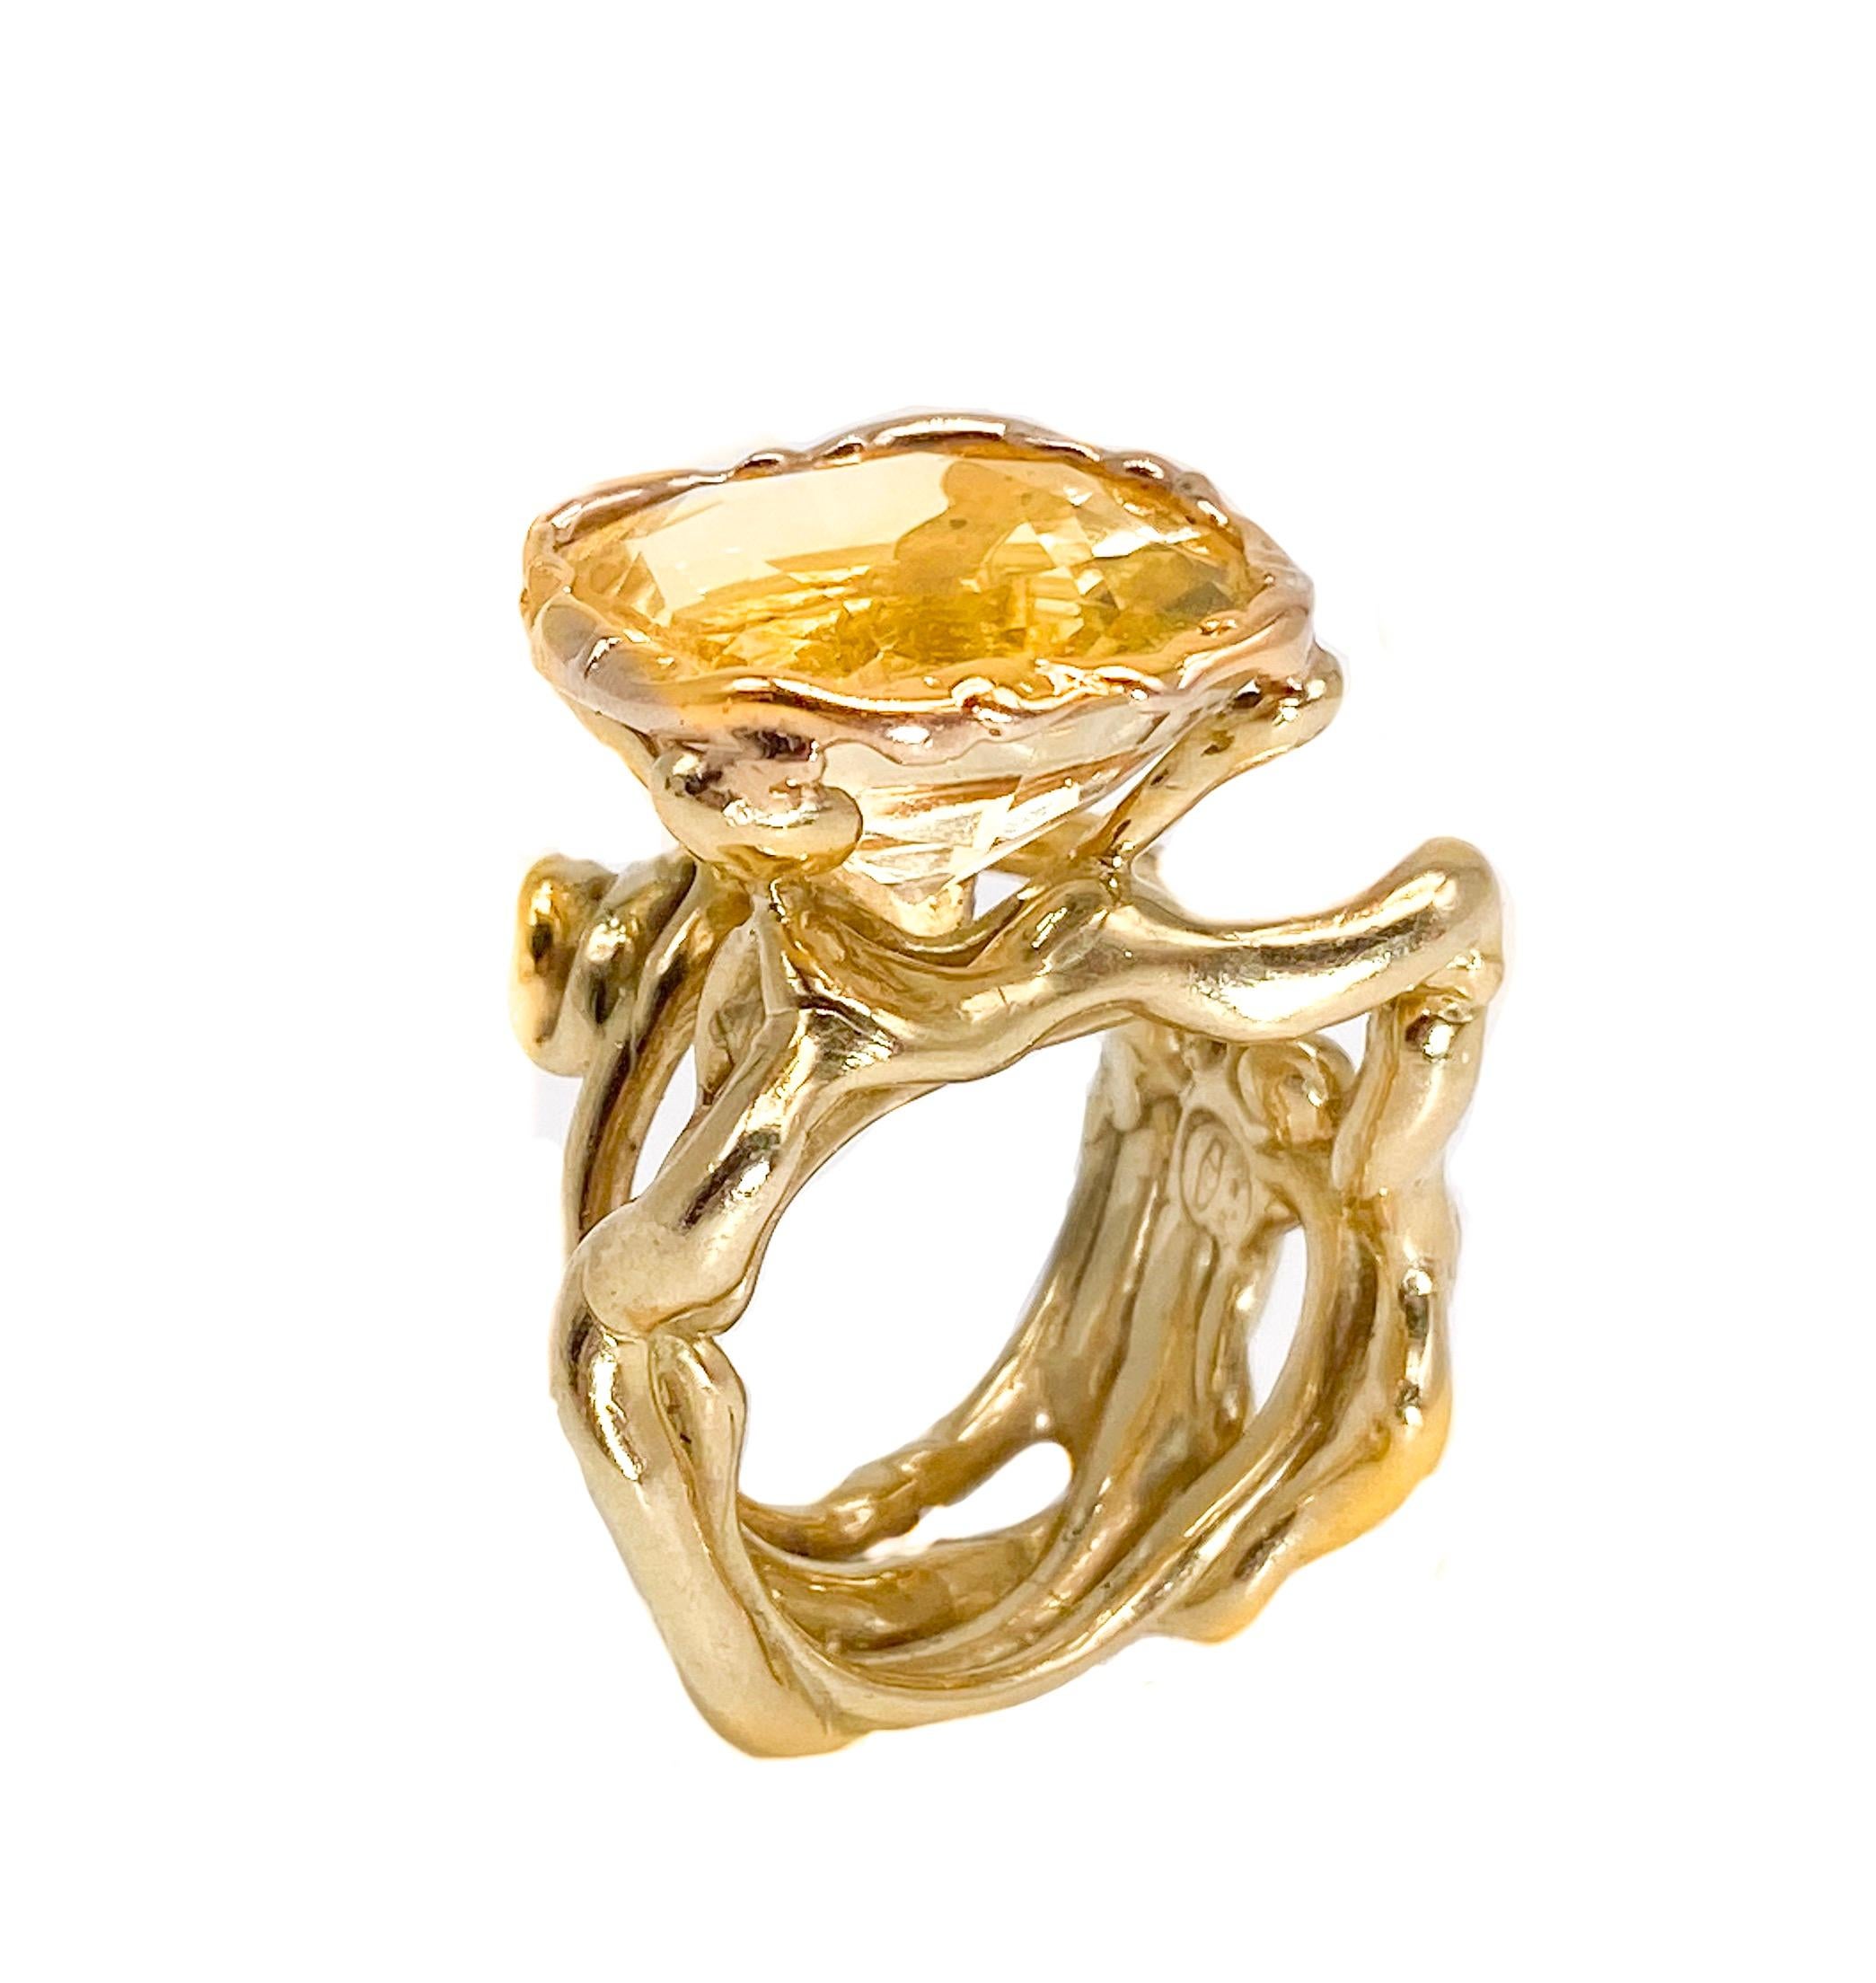 Contemporary 18 Karat Rose Gold Corteccia Ring With Citrine